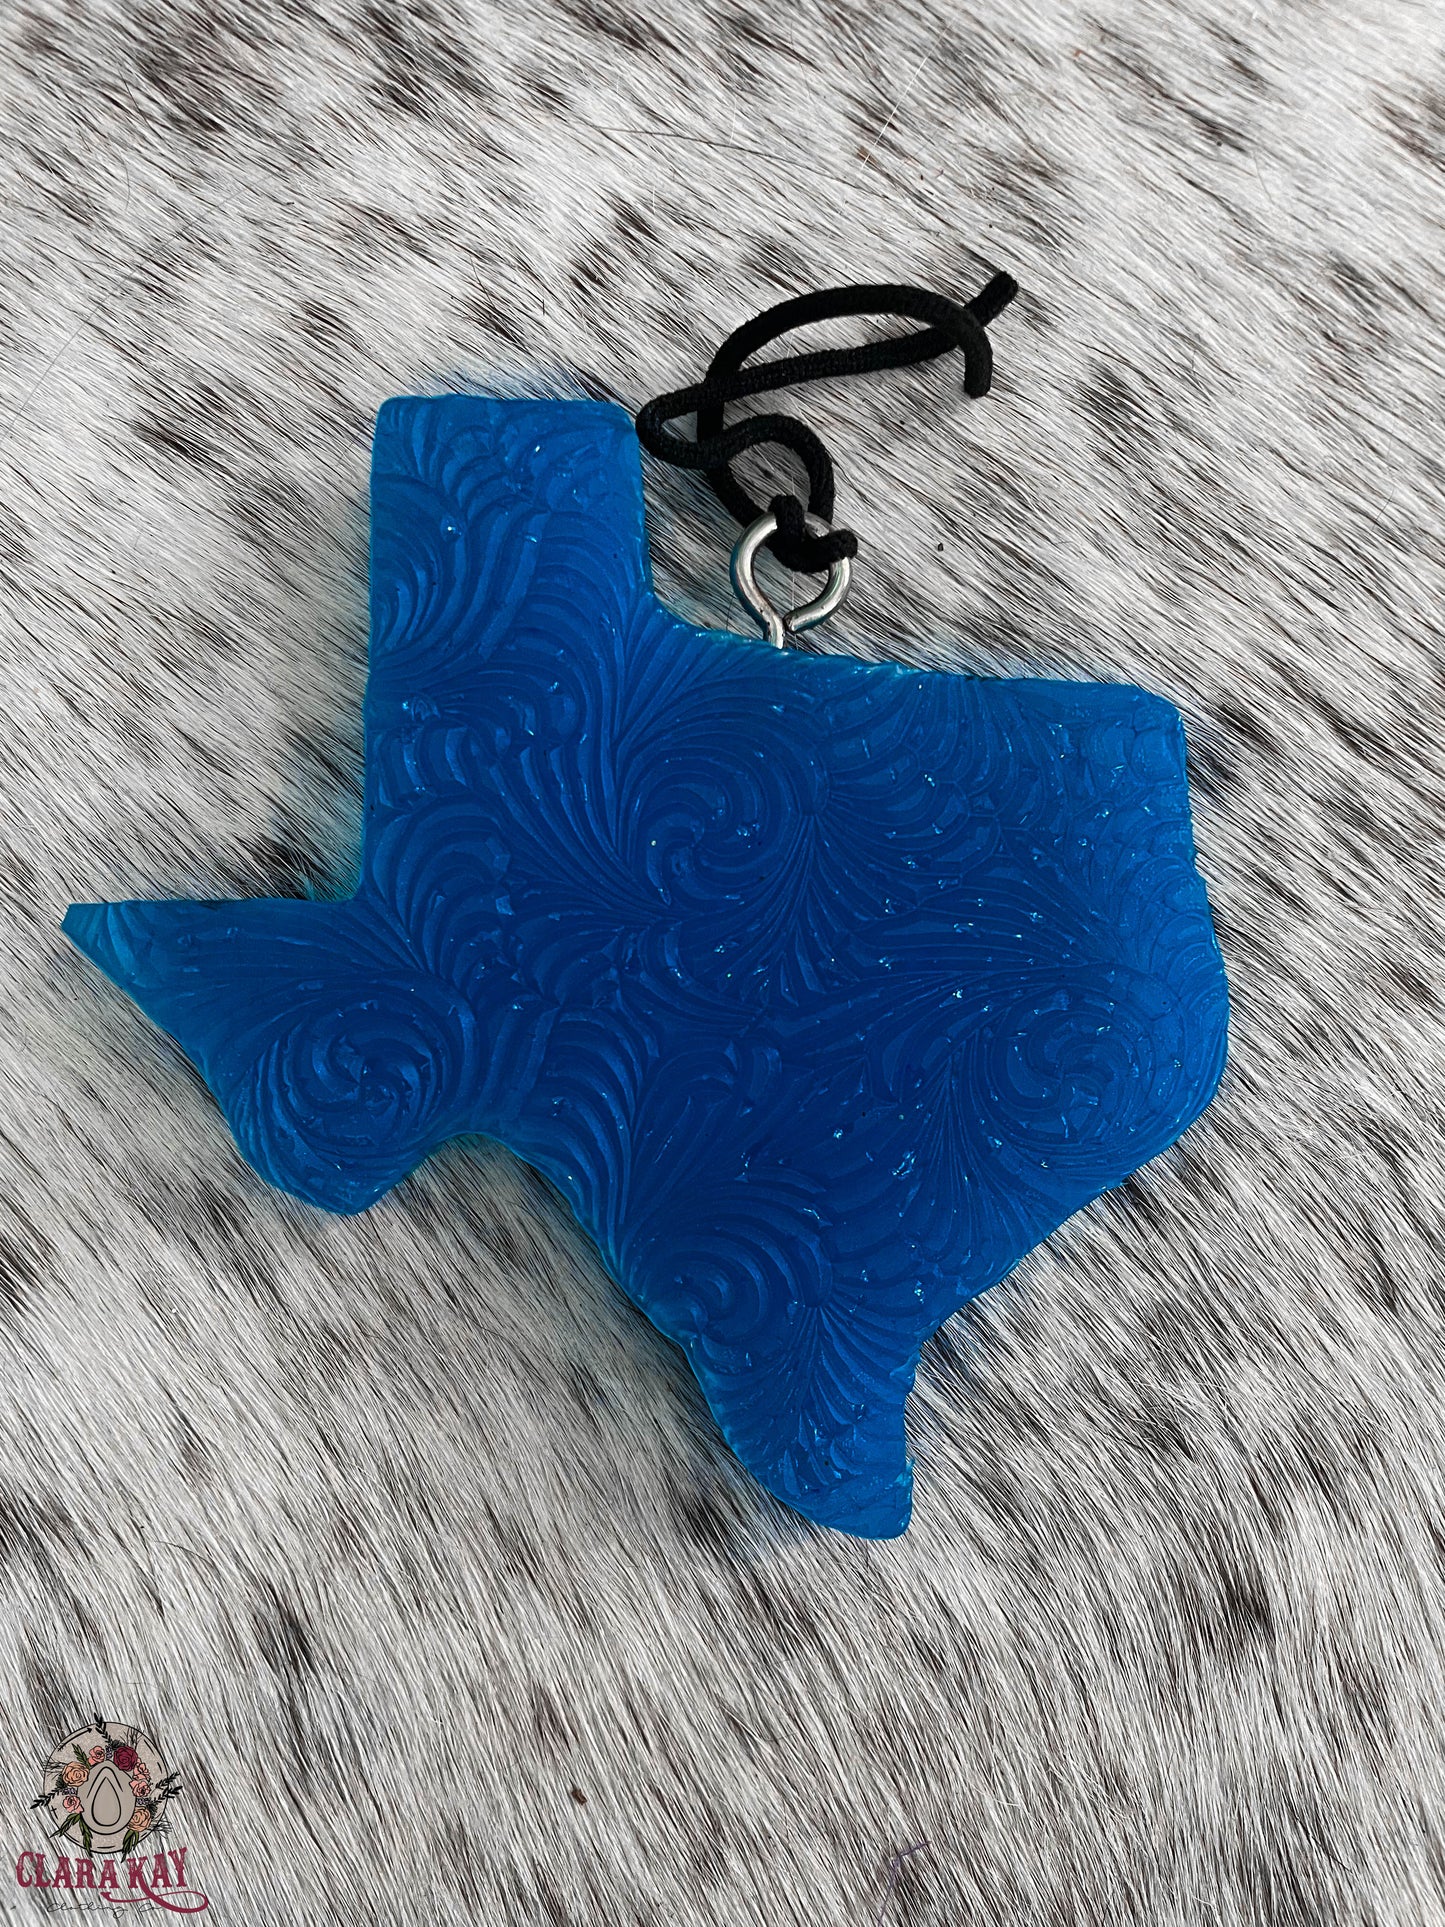 Tooled Texas